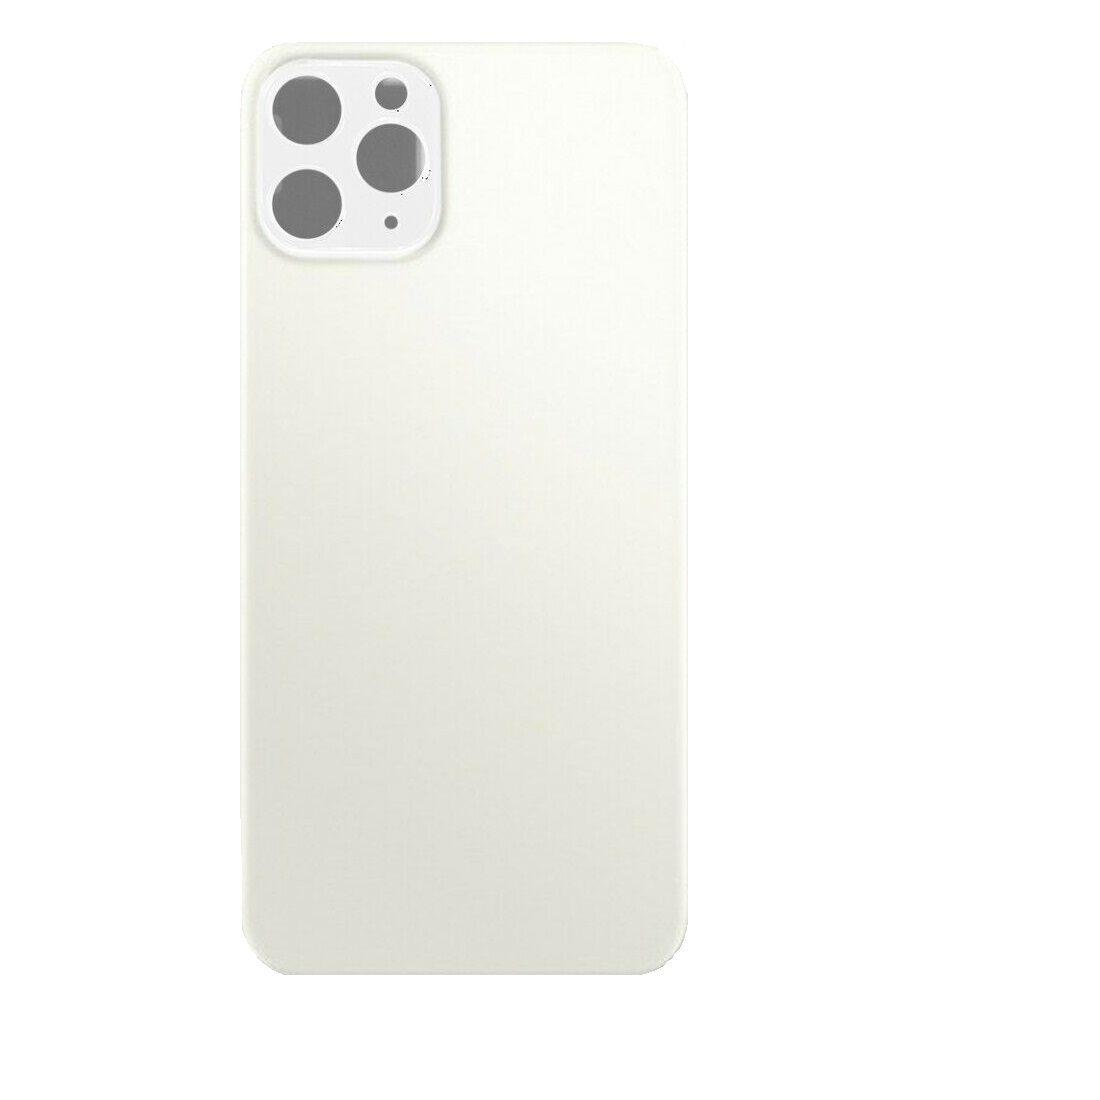 Kryt baterie iPhone 11 Pro Max bílý bez sklíčka kamery